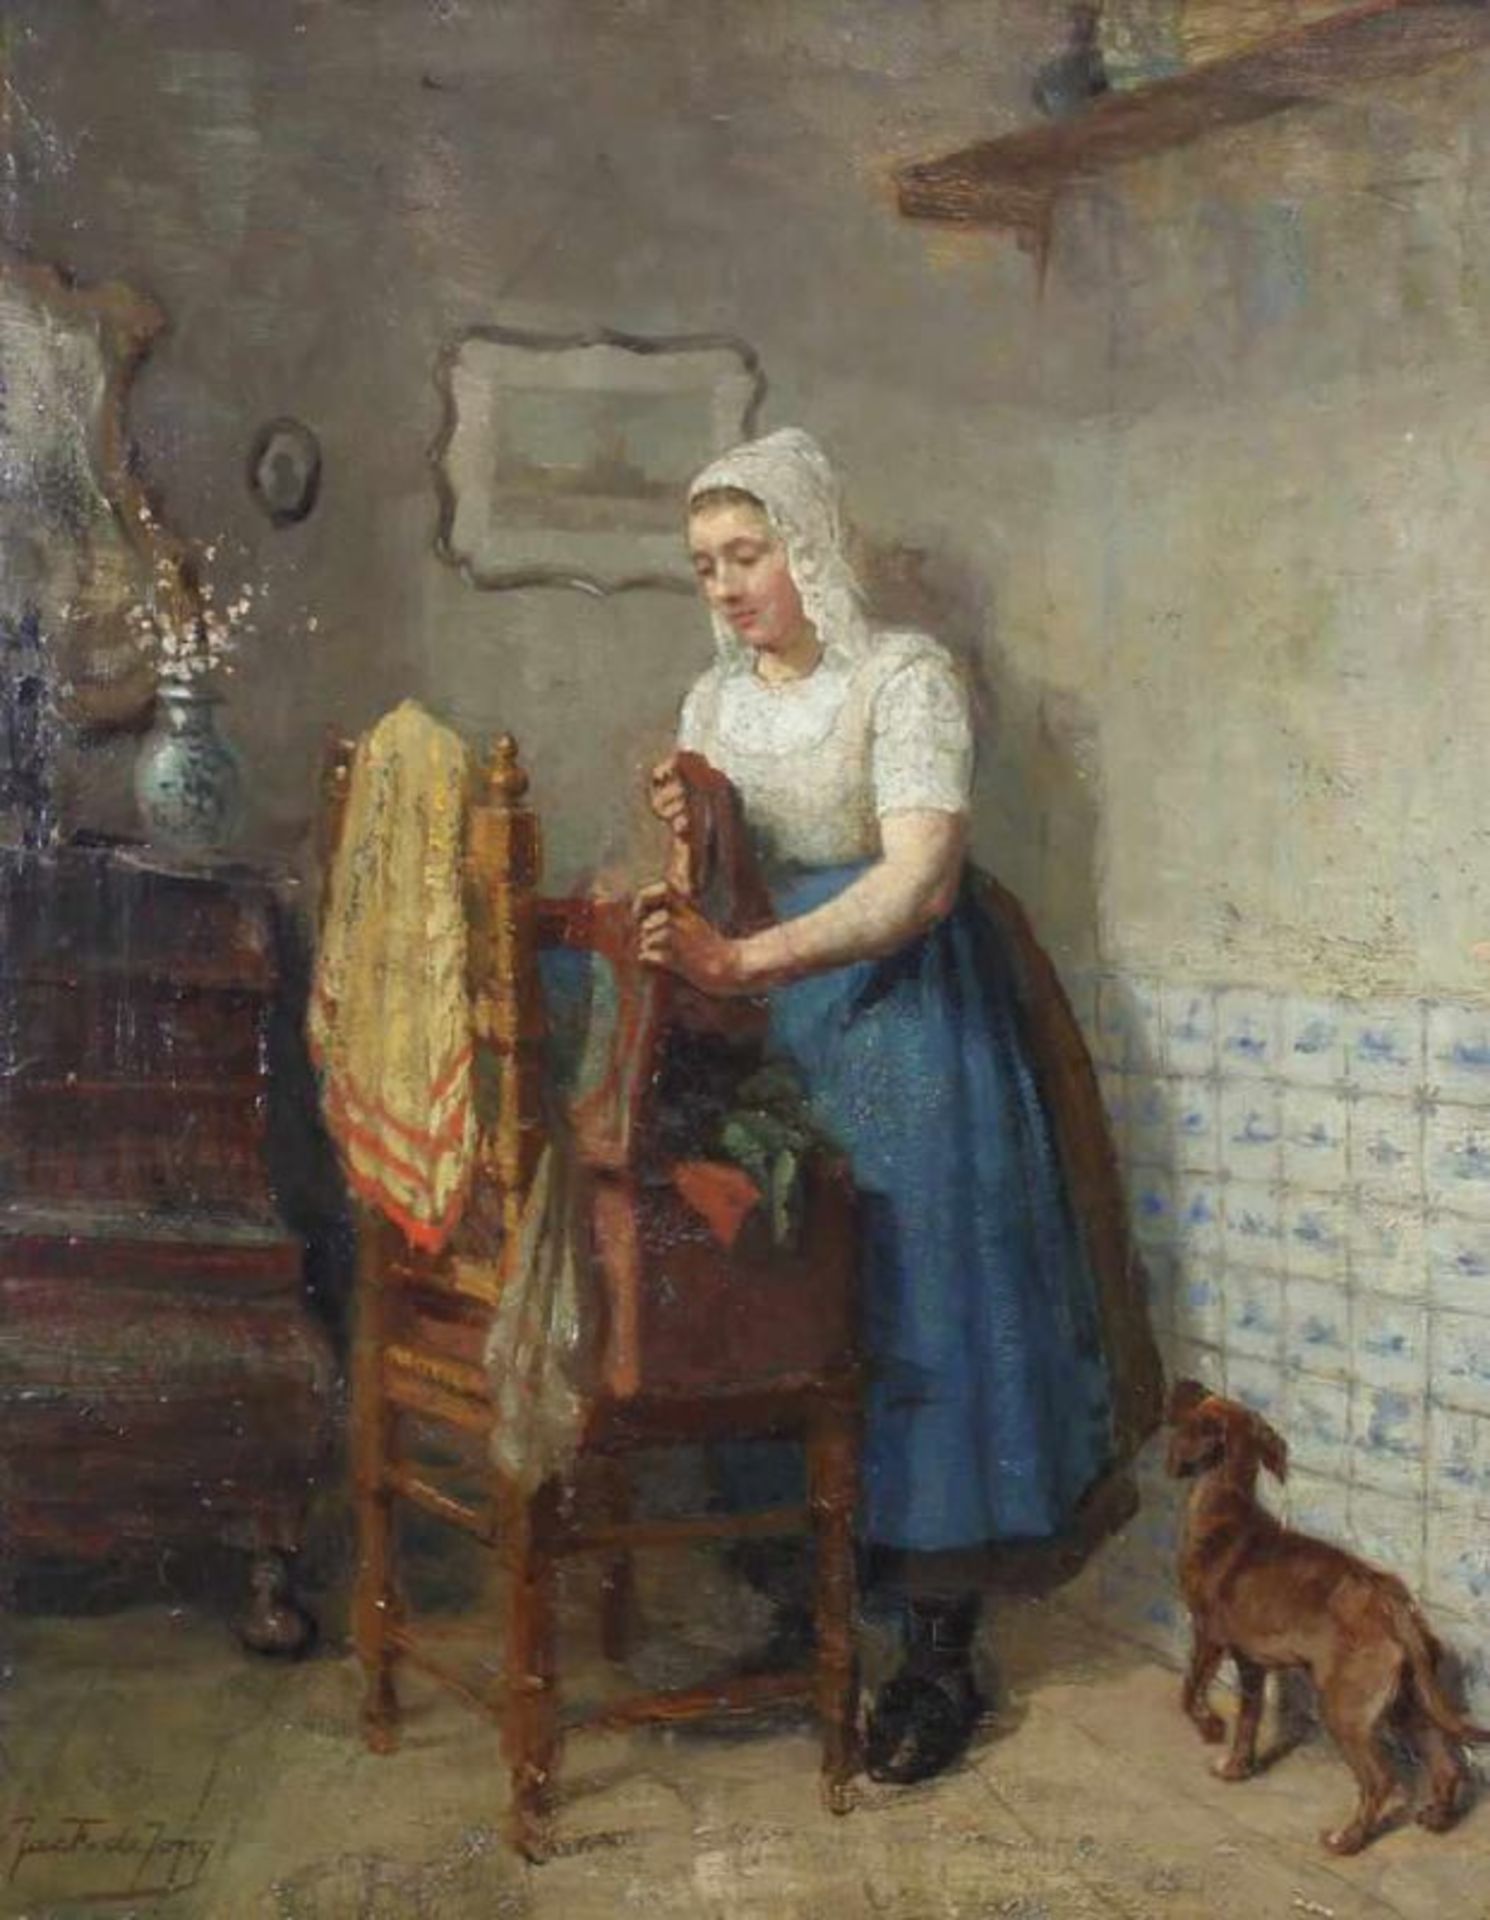 Jong, Jacobus Frederik Sterre de (1866 Niederlande - 1920, Genremaler), "Junge Holländerin in der